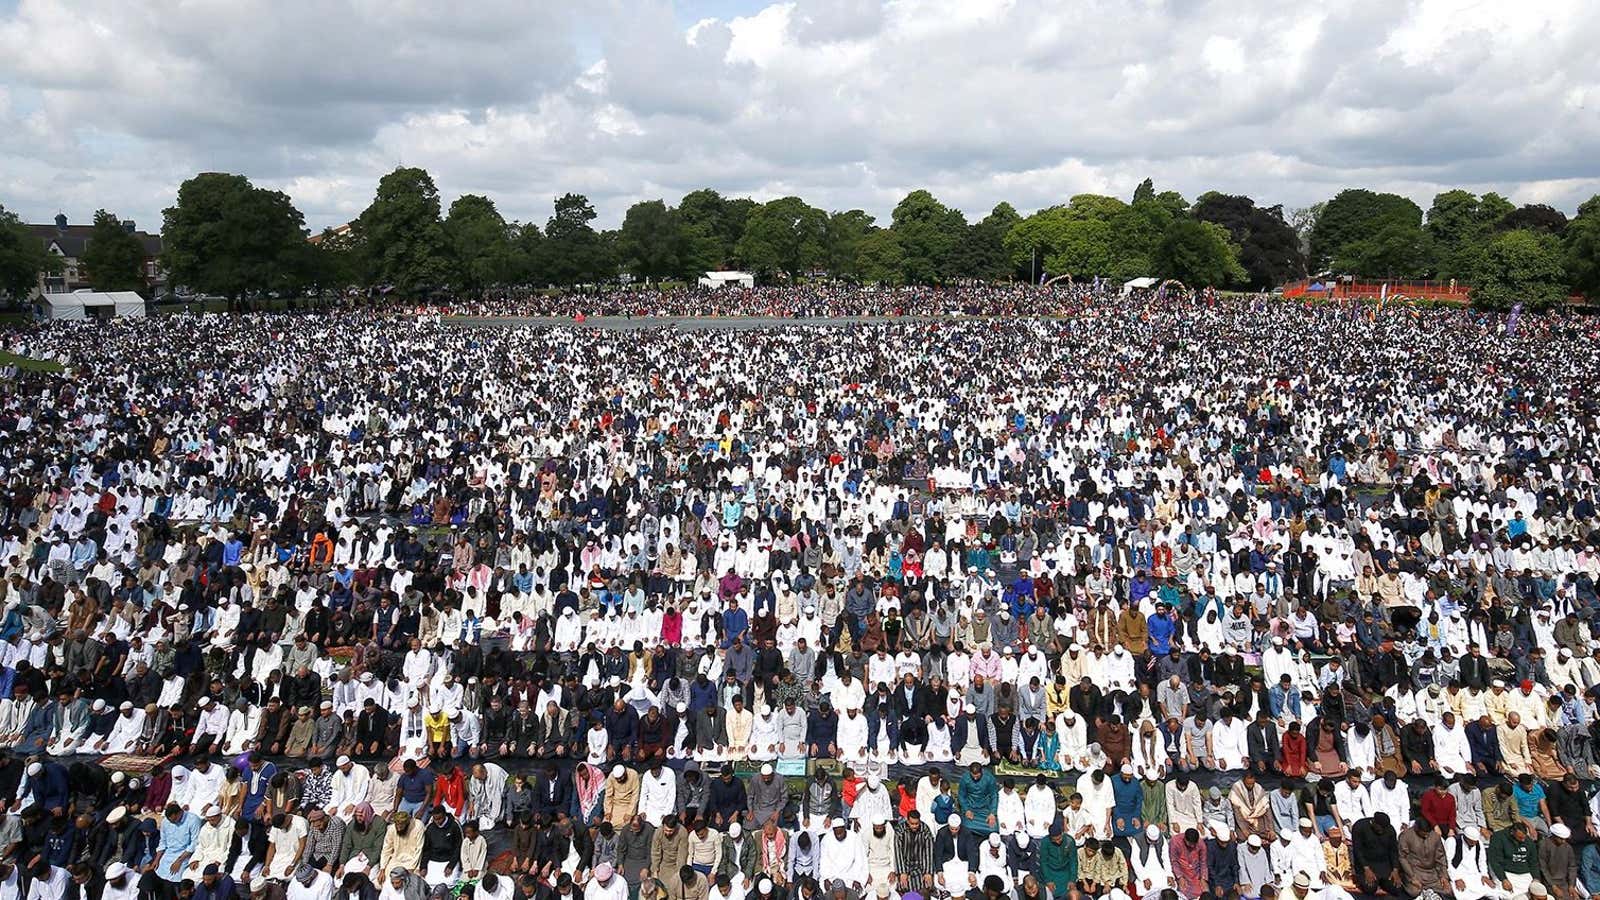 Around 140,000 muslims attend Eid al-Fitr prayers to mark the end of Ramadan, in Small Heath Park in Birmingham, Britain, June 15, 2018. REUTERS/Henry Nicholls – RC1783D4C980